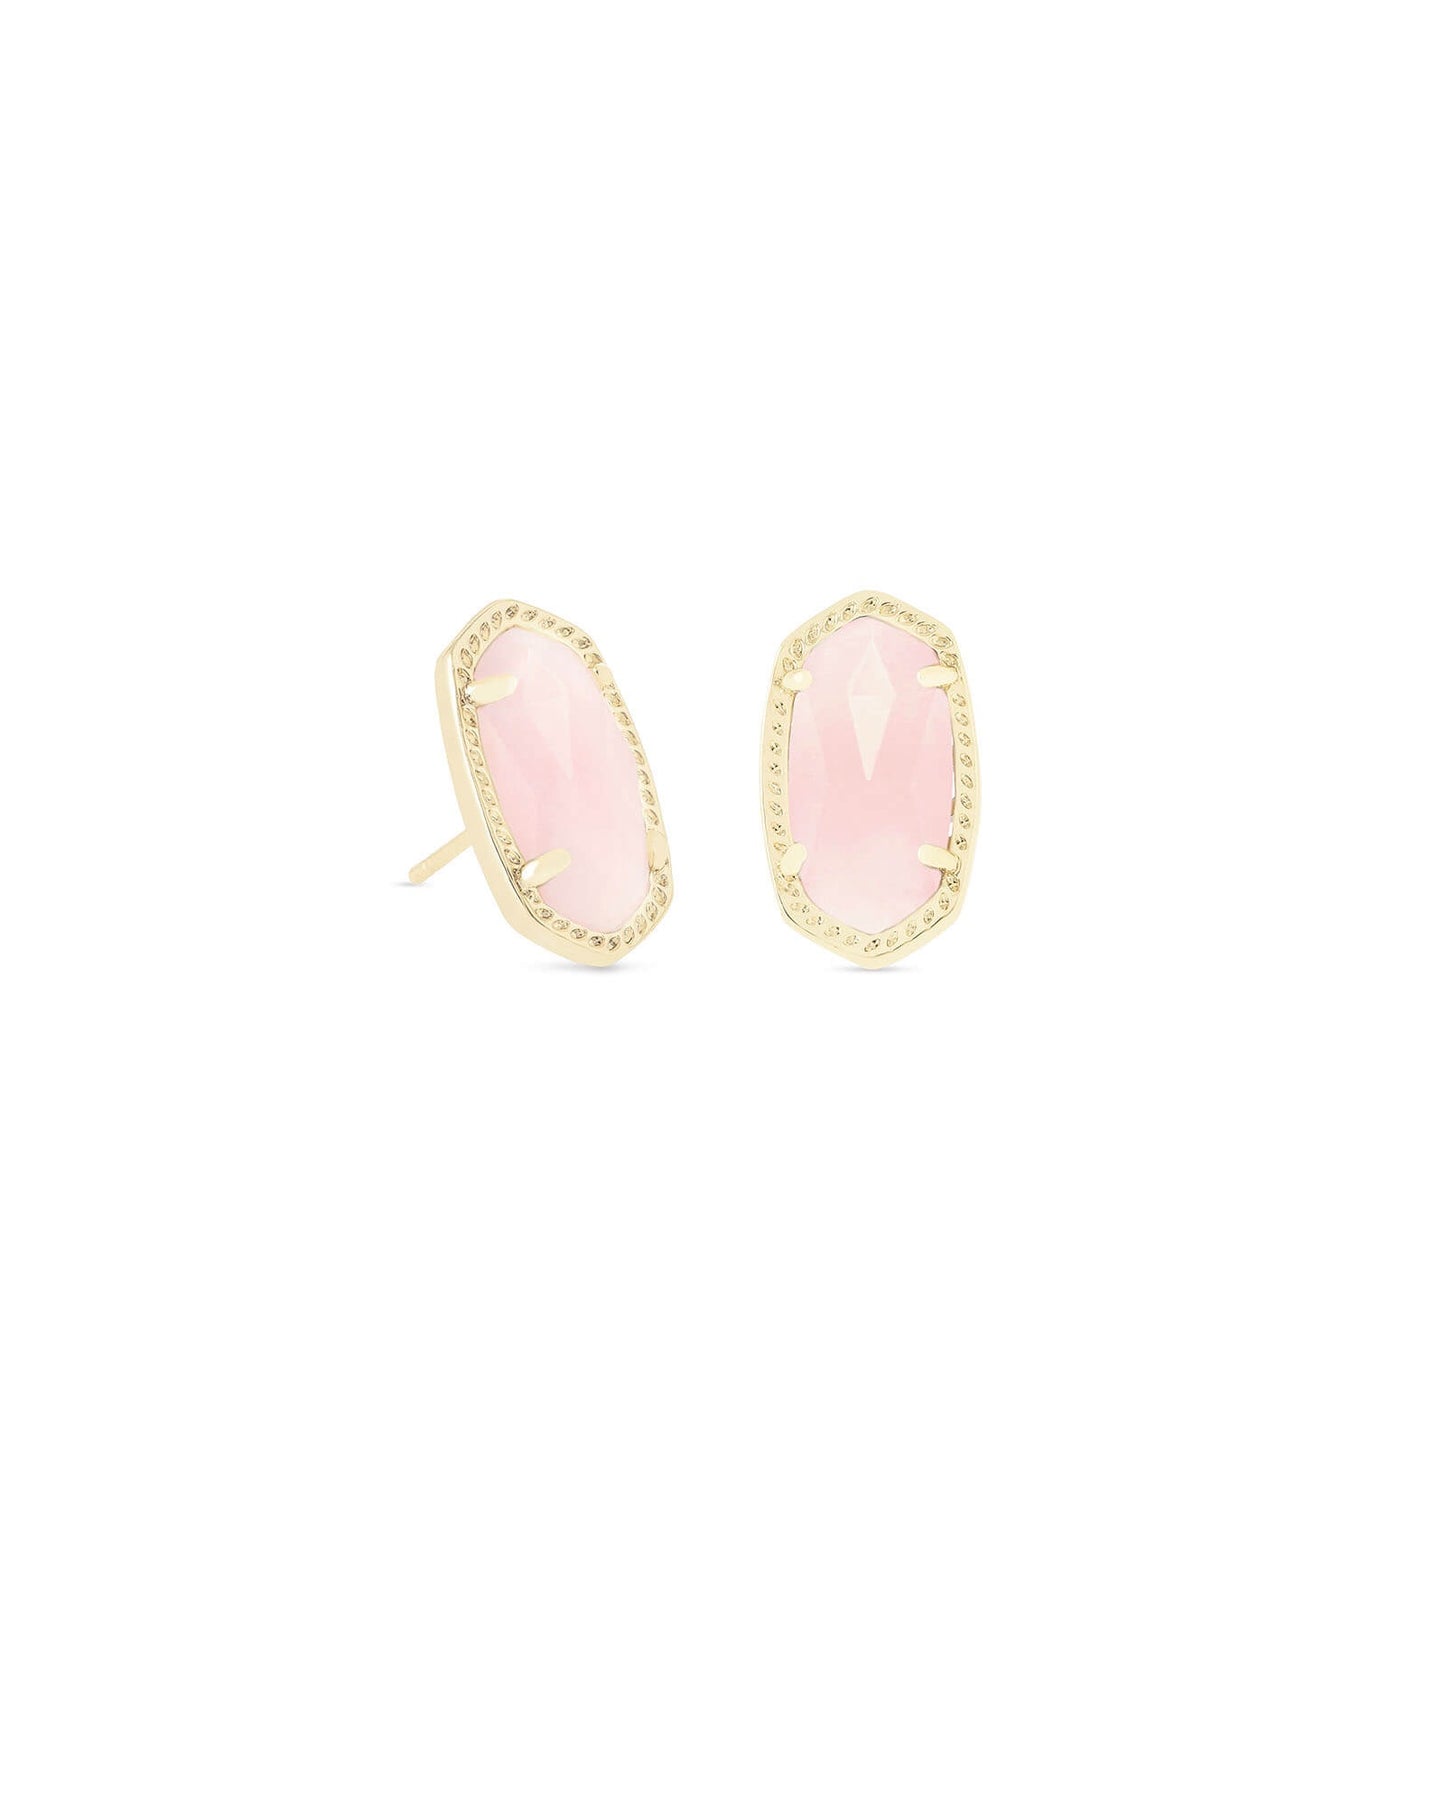 Ellie Gold Stud Earrings-Rose Quartz - Brazos Avenue Market 